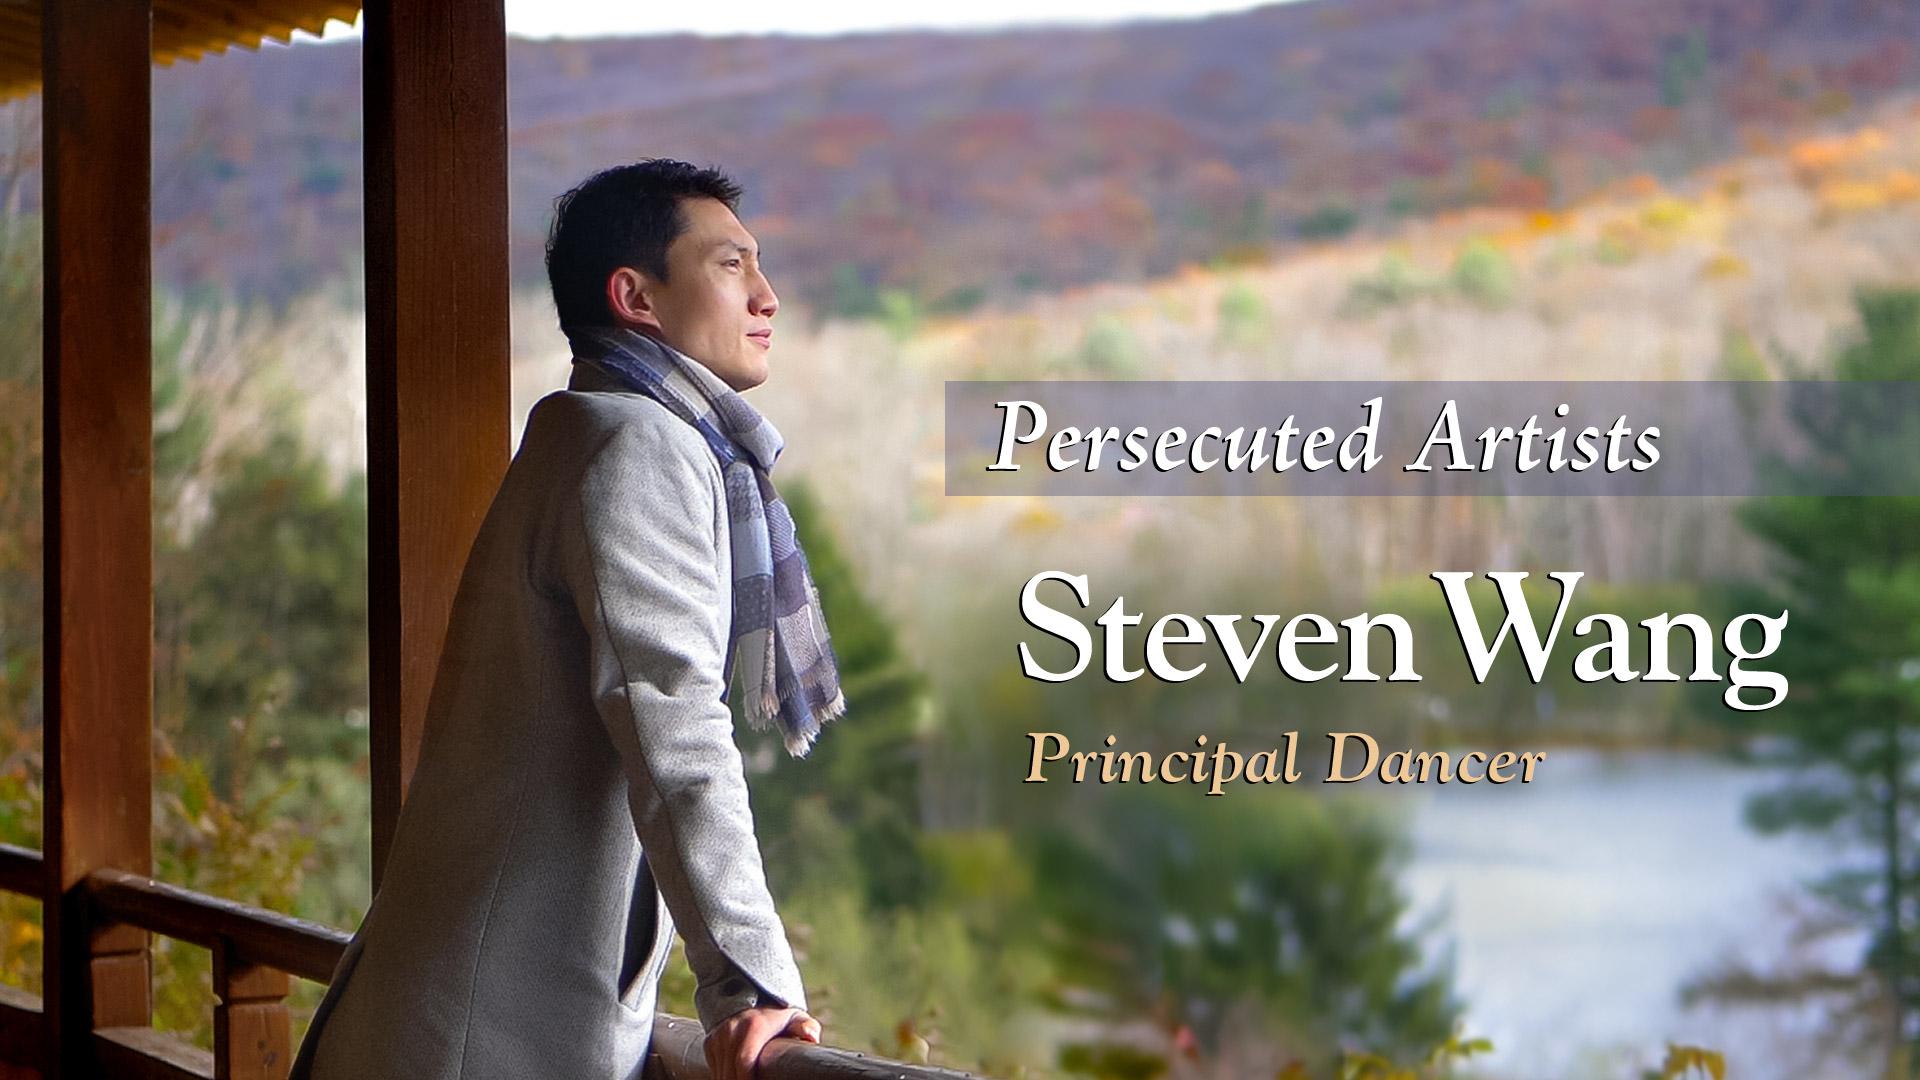 Persecuted Artists - Principal Dancer Steven Wang